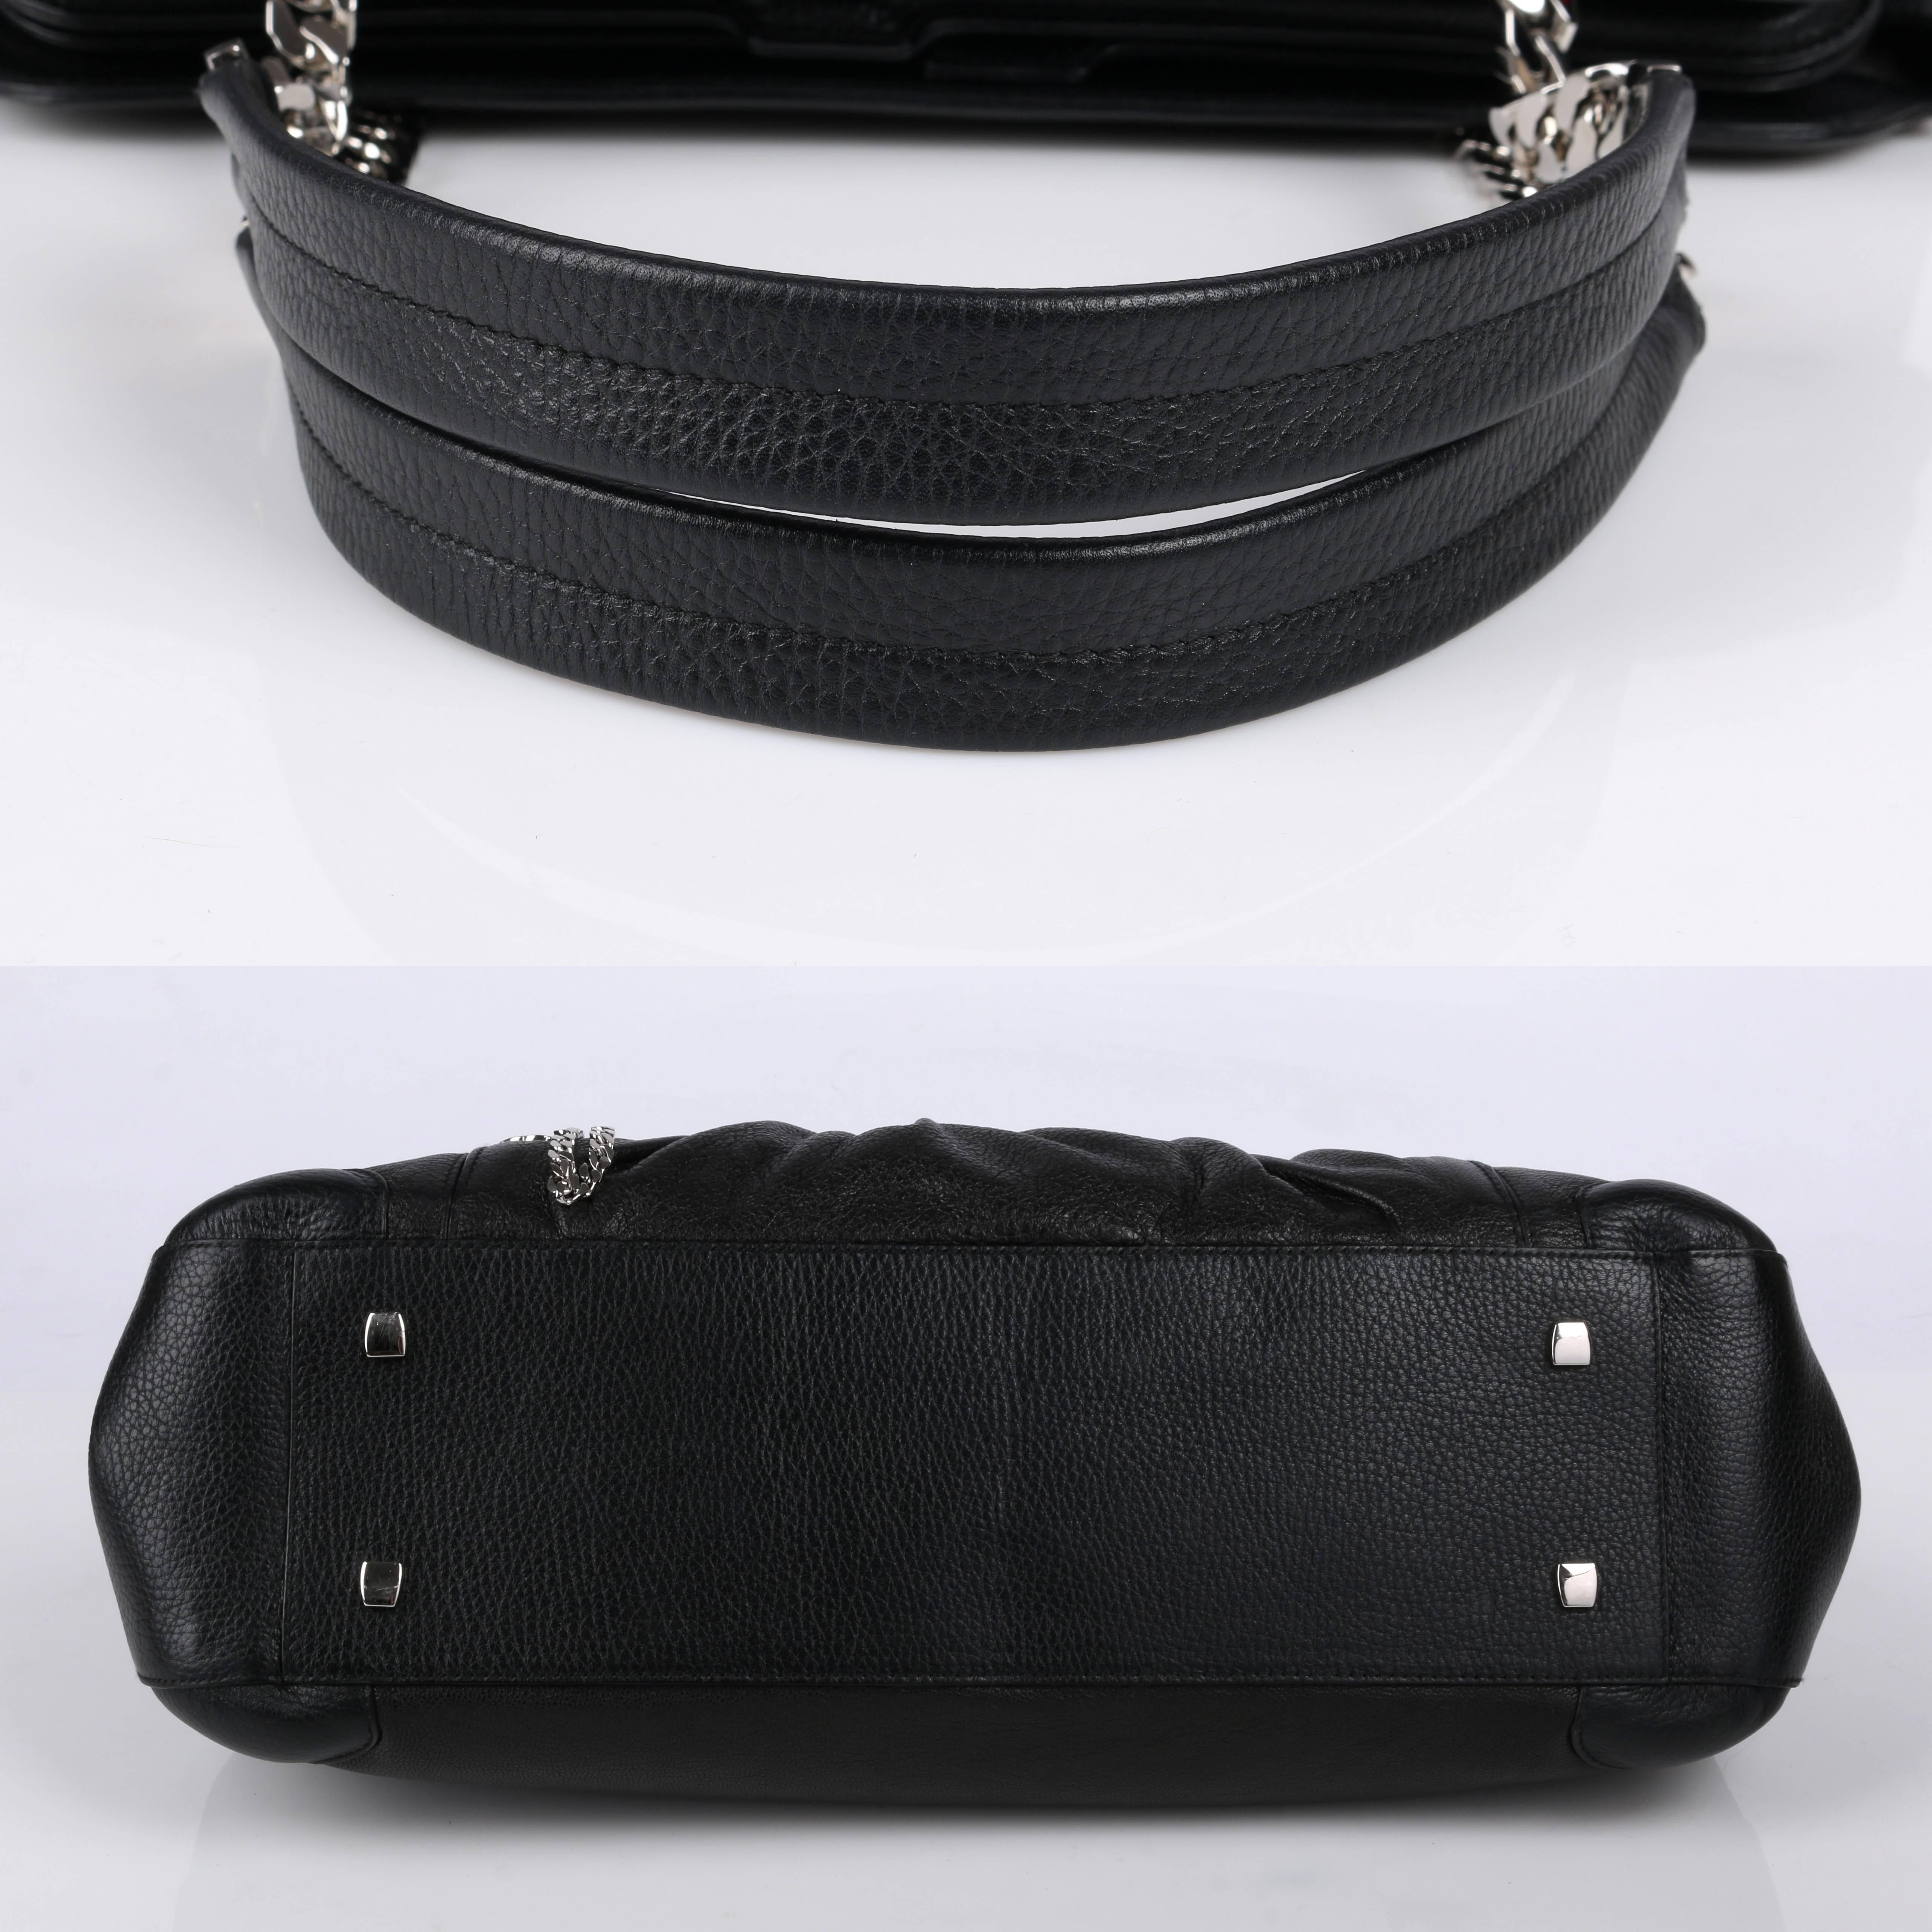 CARTIER Black Textured Leather La Dona Chain Link Satchel Bag Handbag Purse 2